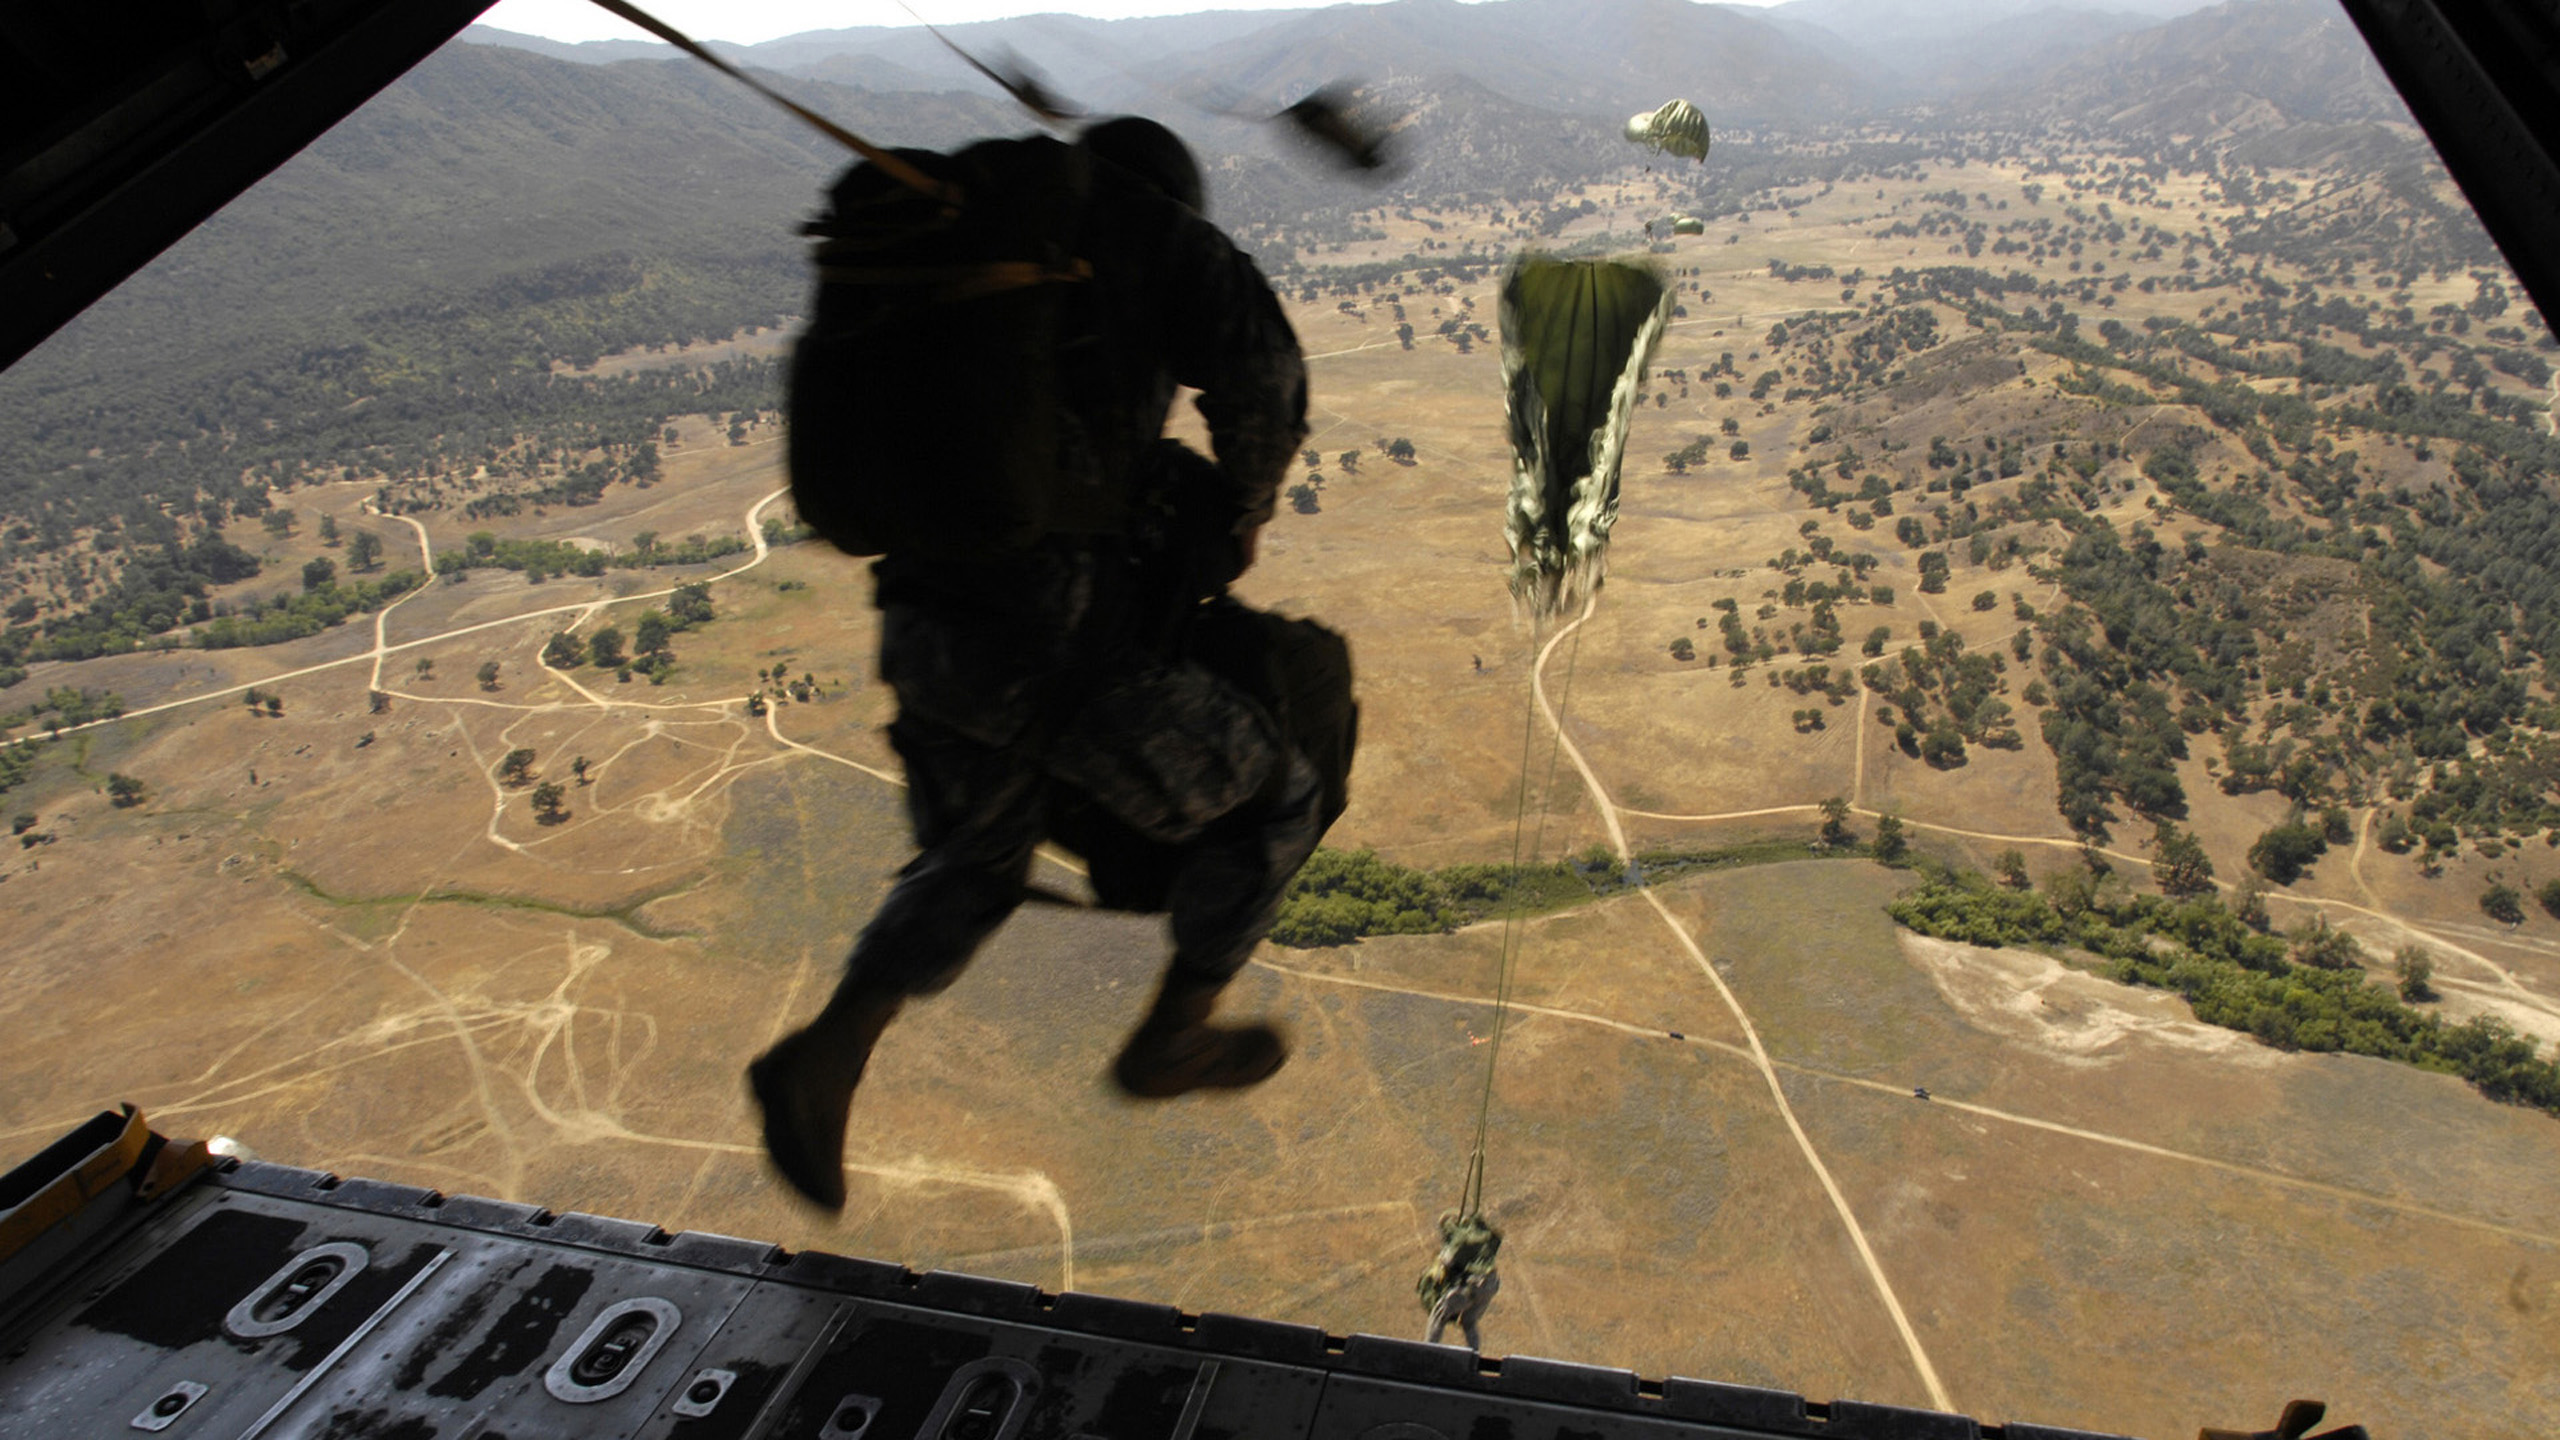 Qo739 Airborne Wallpaper Photos In High